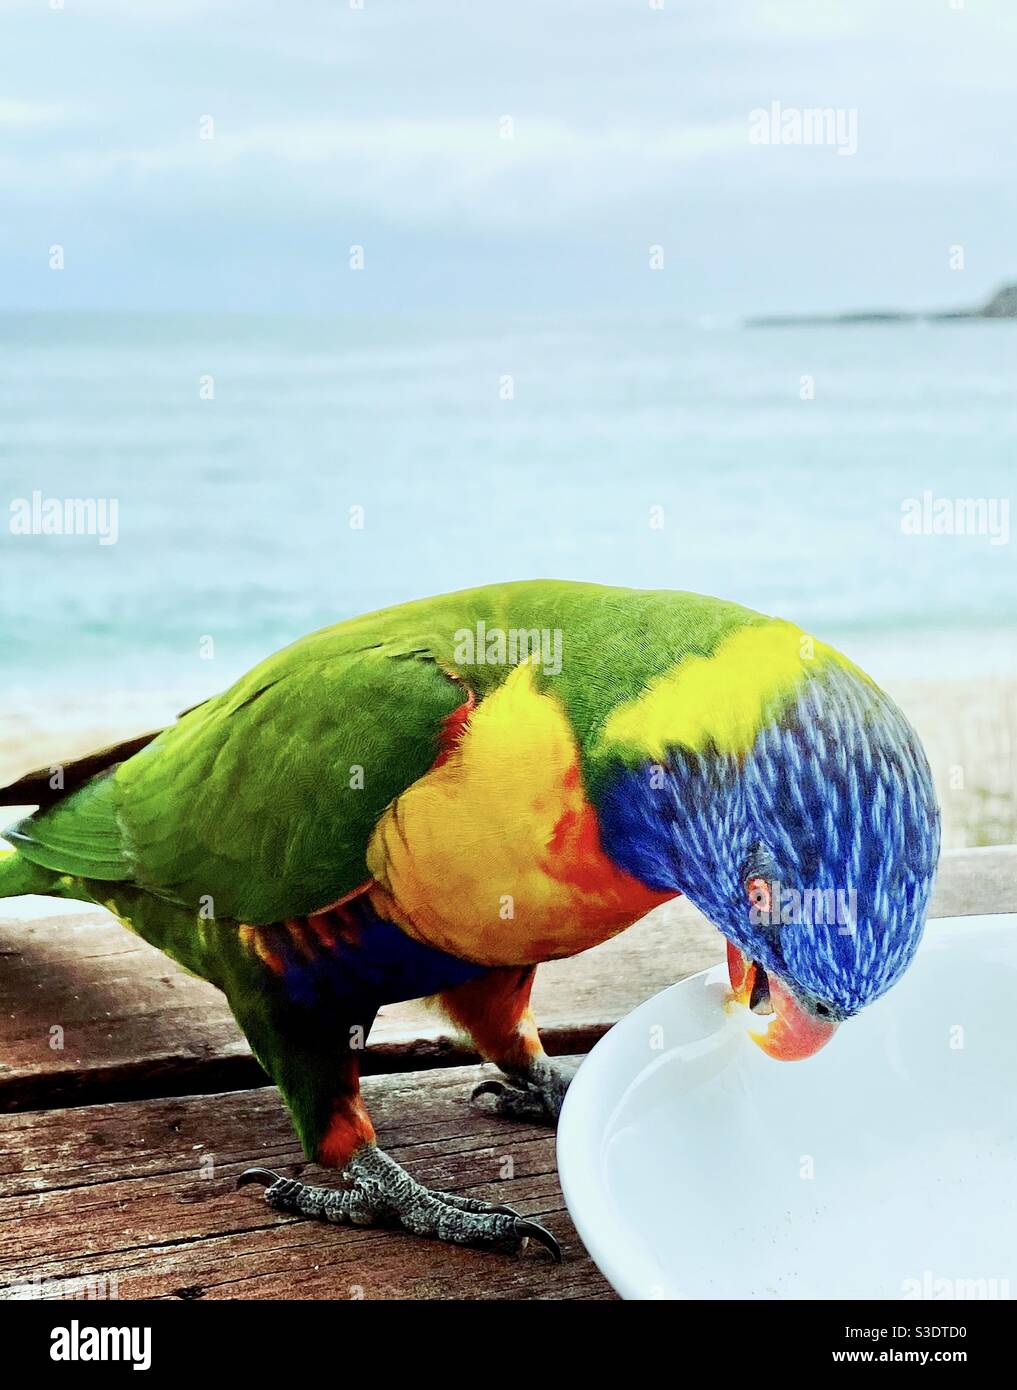 A rainbow lorikeet drinks from white bowl, coastal seascape in background. Closeup of Australia parrot. A bright colourful Australian lorikeet enjoys breakfast by the ocean. Stock Photo